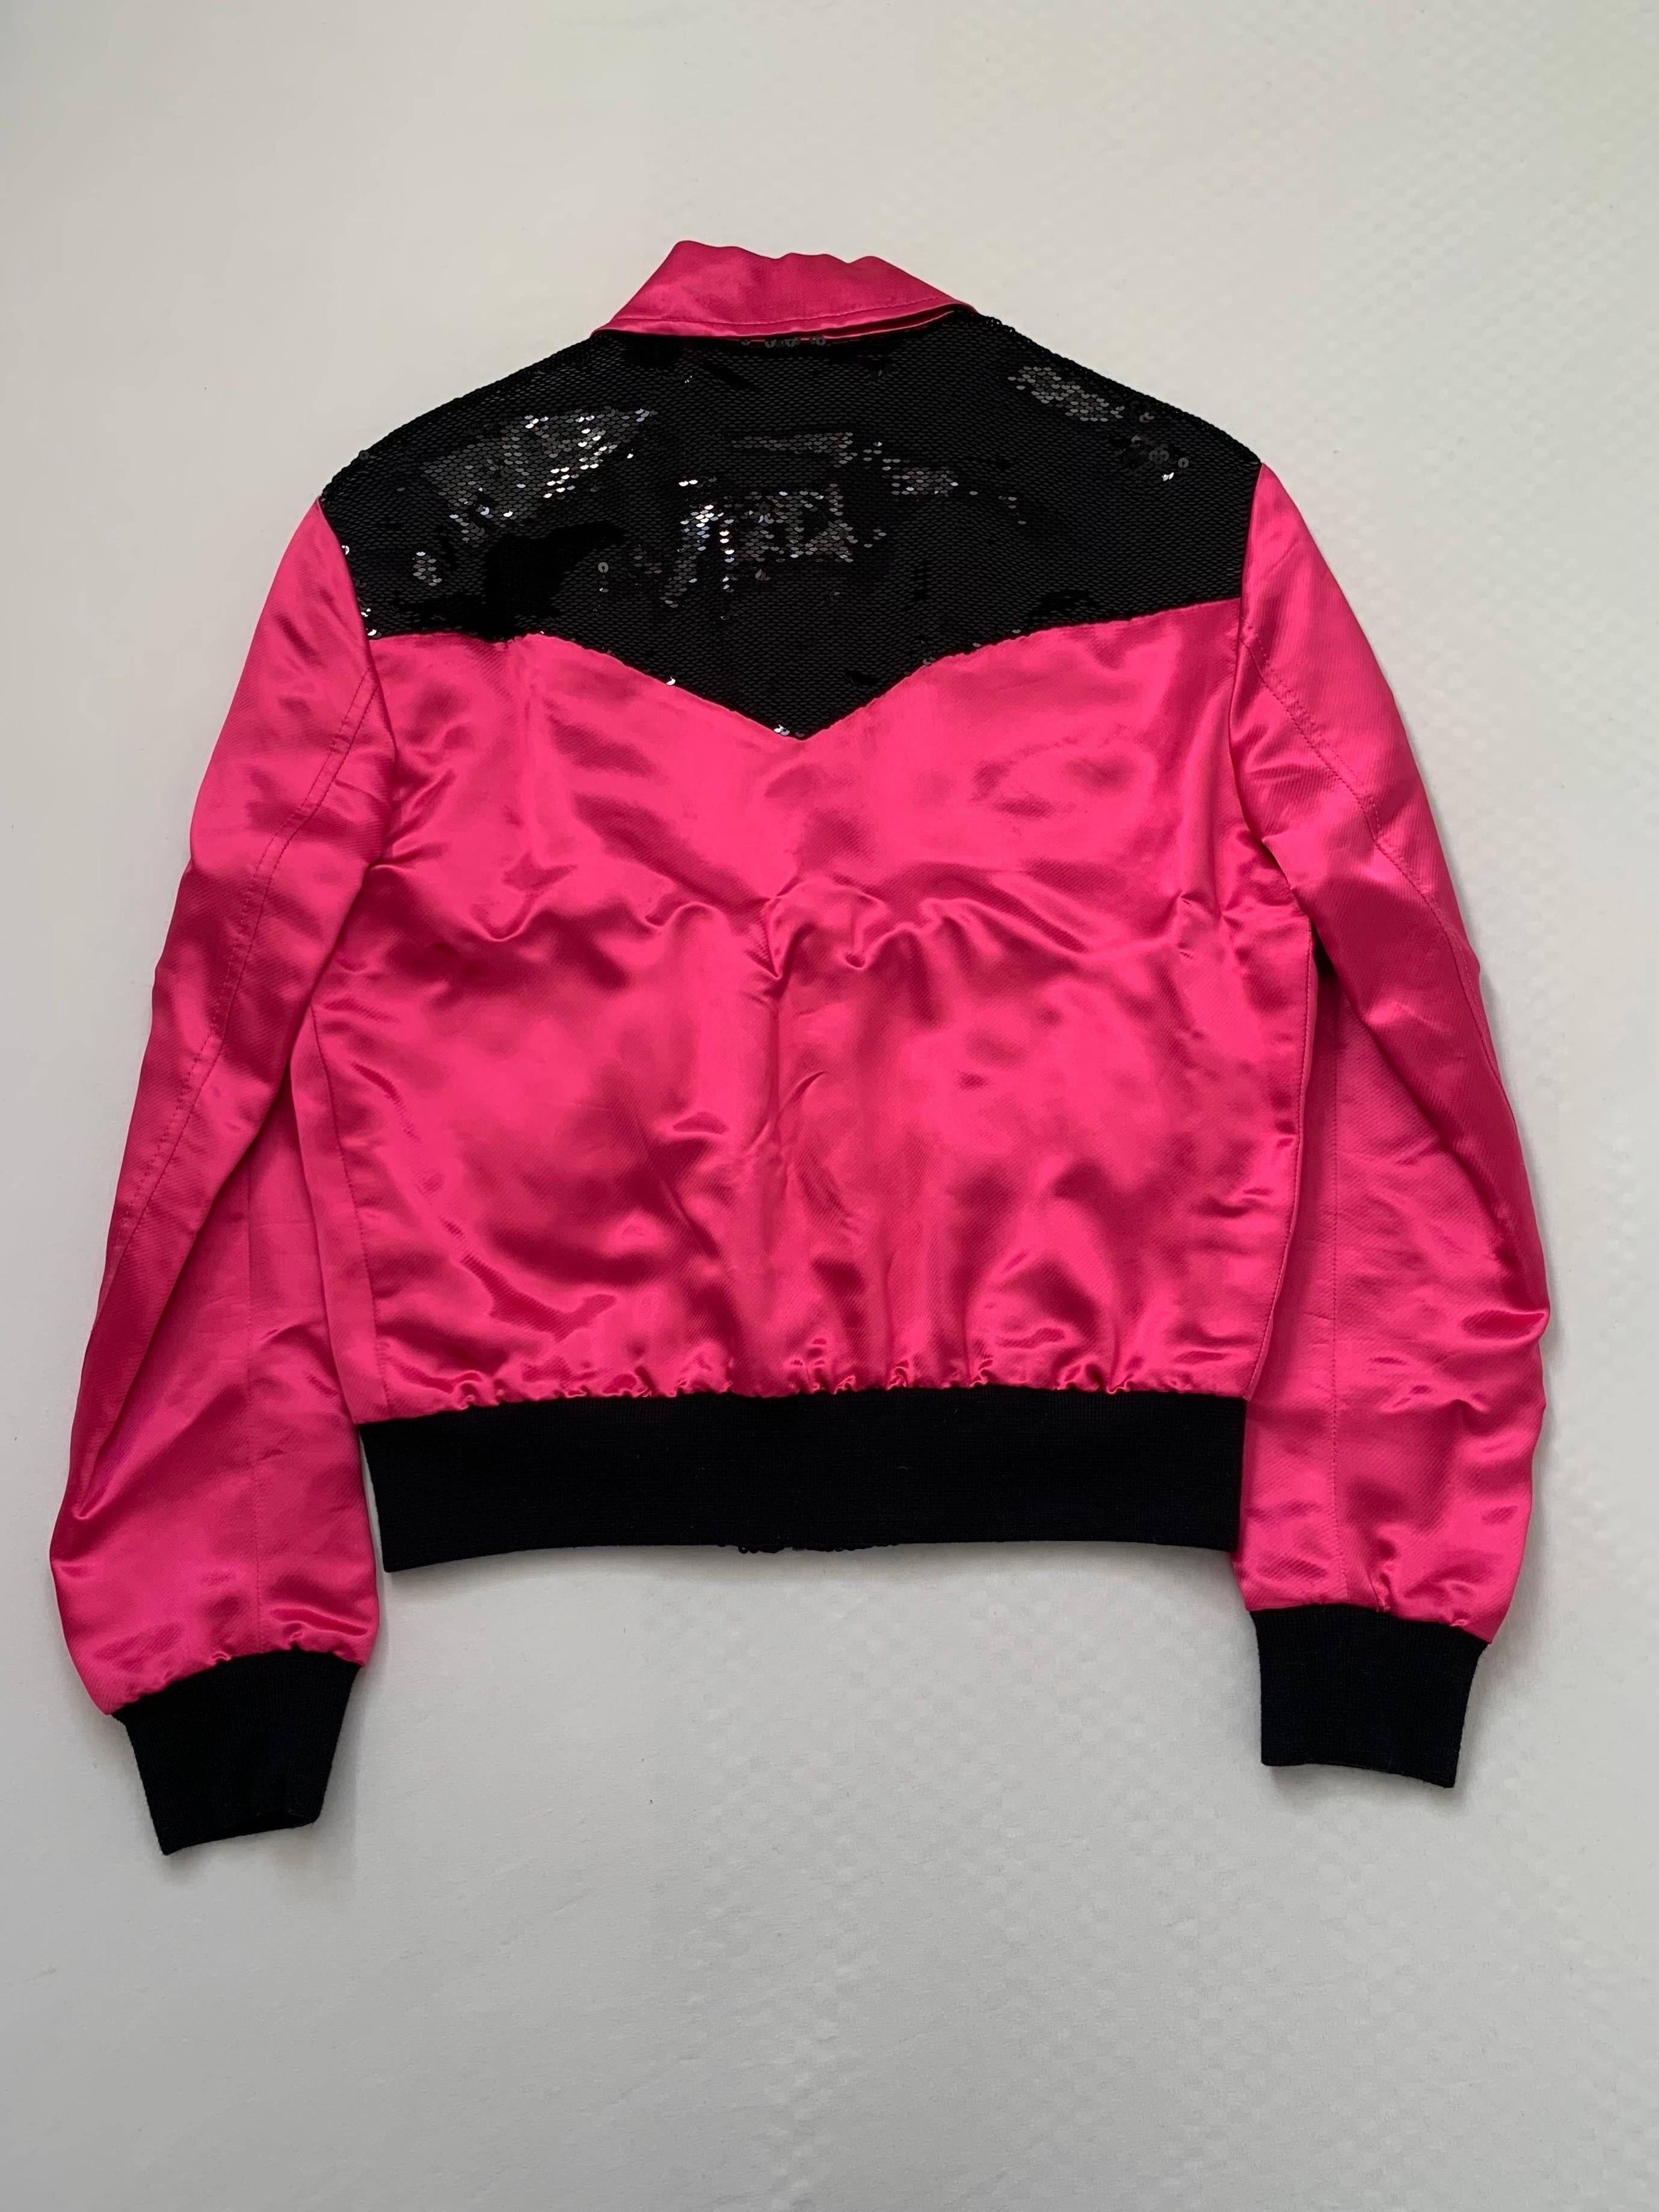 Saint Laurent Paris by Hedi Slimane FW2016 1/1 sample sequin jacket pink  For Sale 1